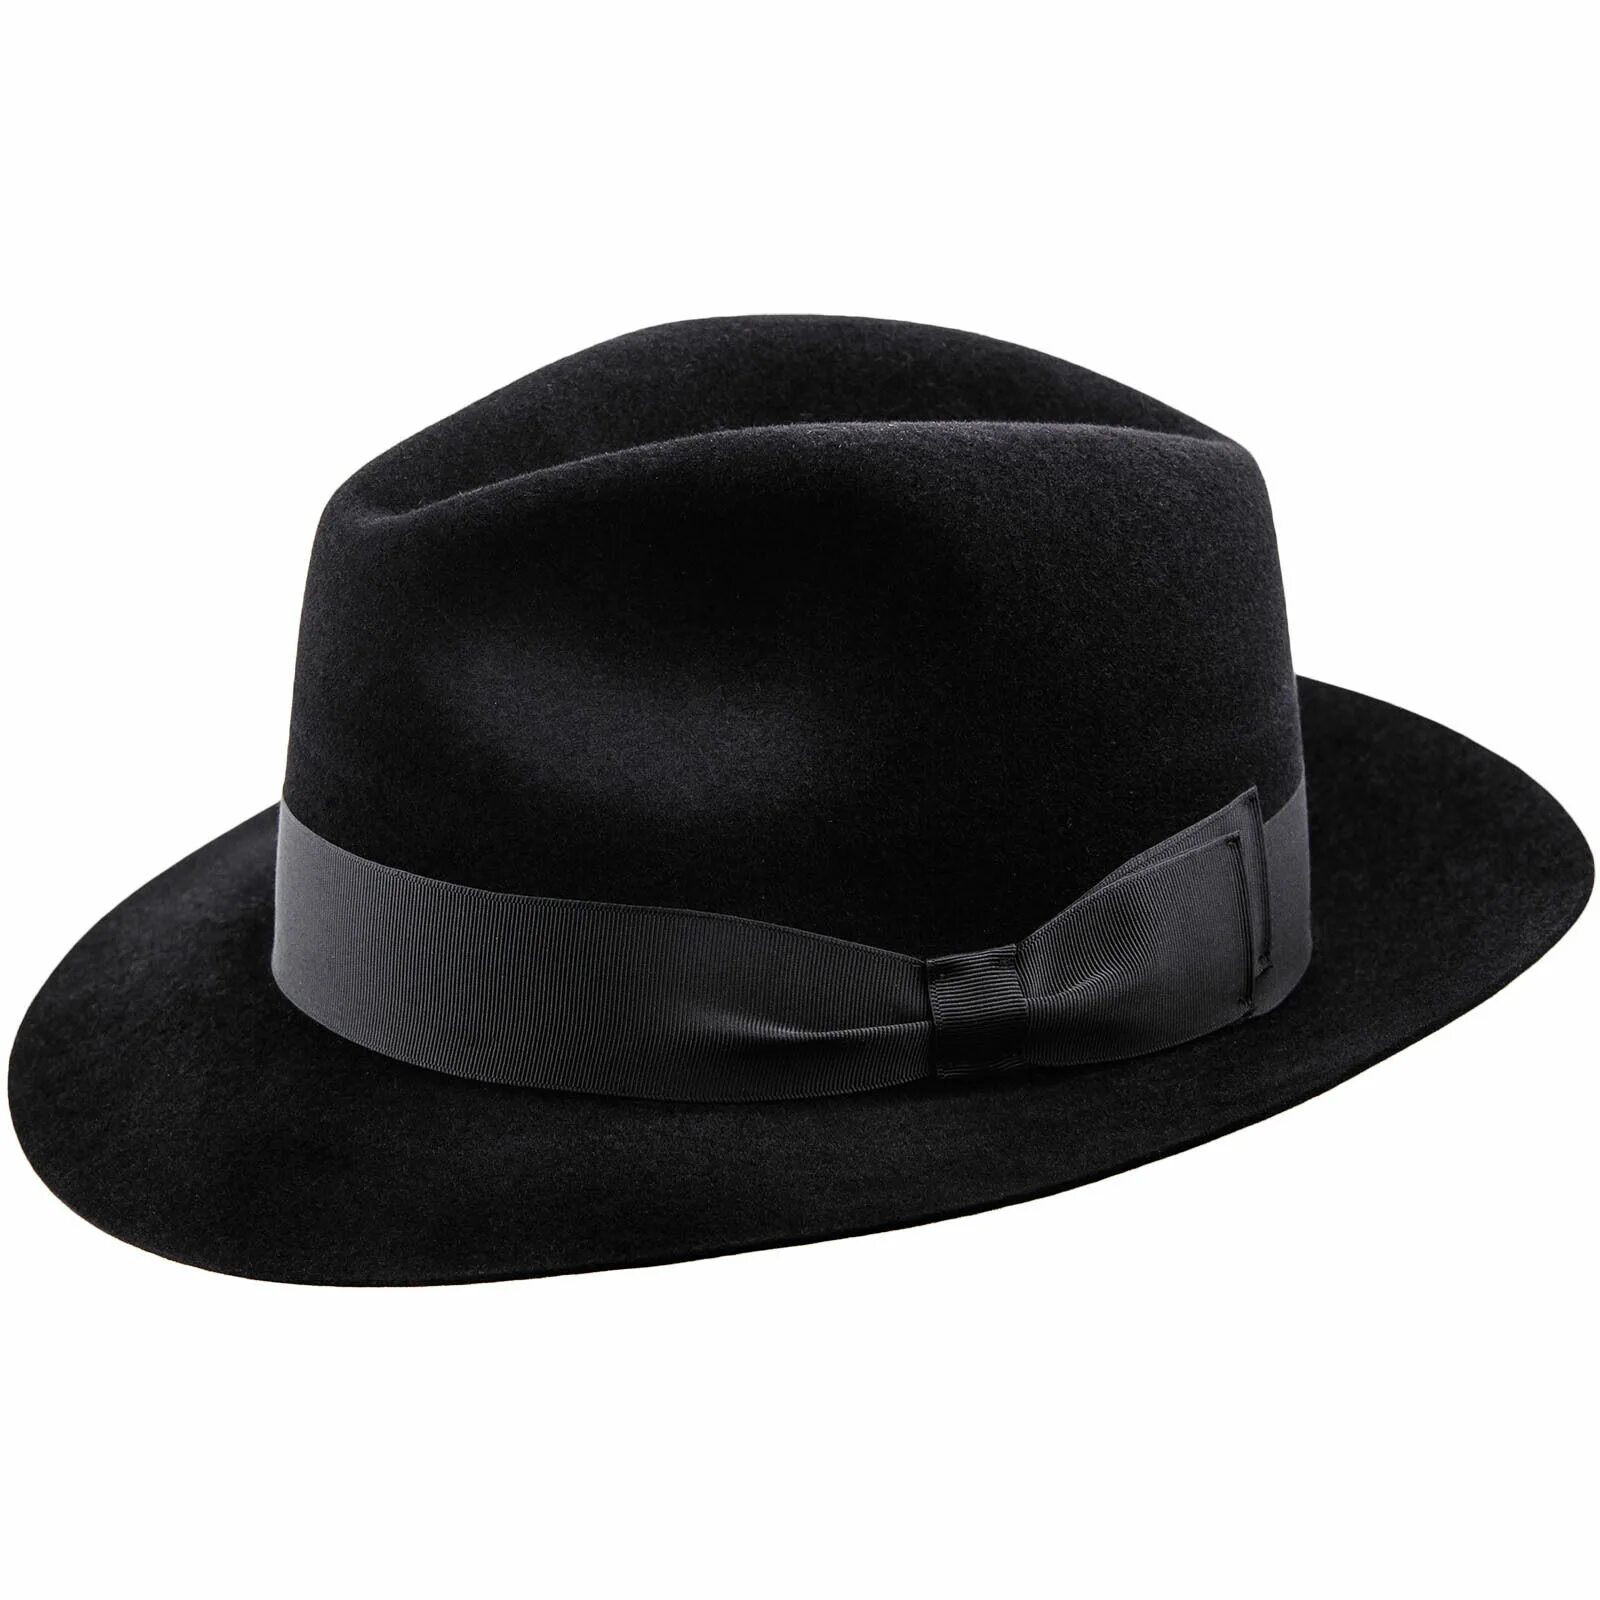 Плотная шляпа. Шляпа мужская Федора Монтгомери. Fedora шляпа мужская. Шляпа Федора Бове. Фетровая шляпа Федора.